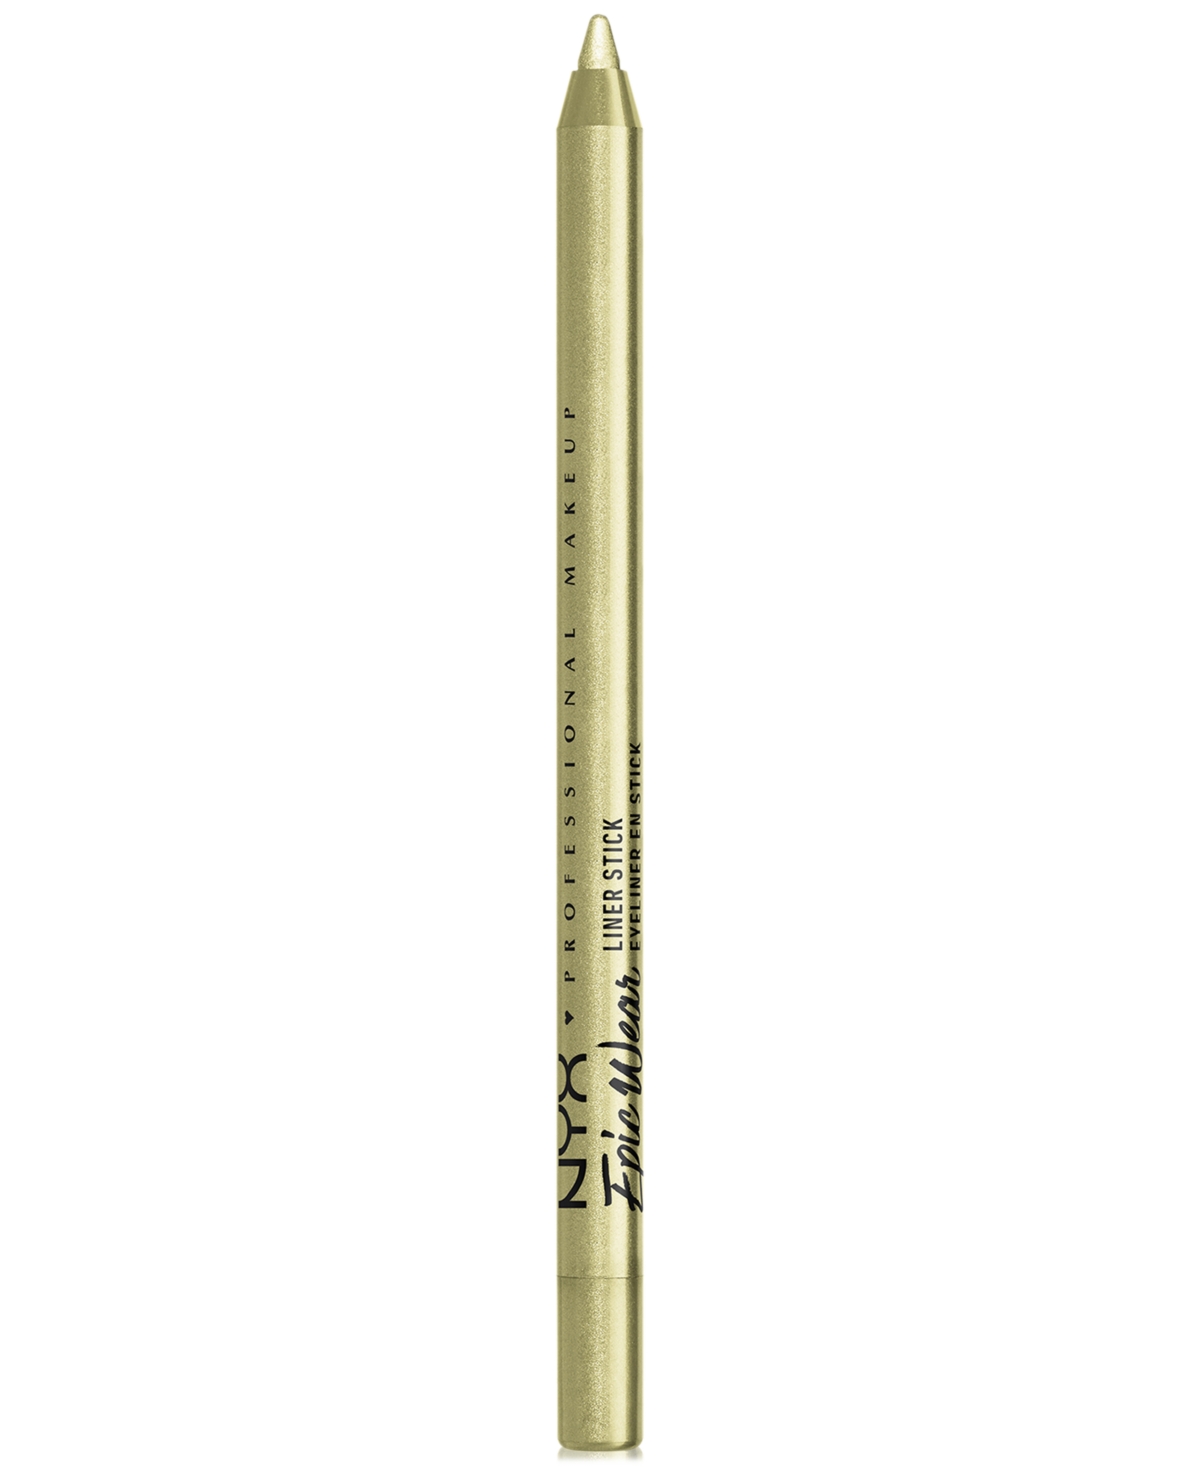 Epic Wear Liner Stick Long-Lasting Eyeliner Pencil - Chartreuse (chartreuse)